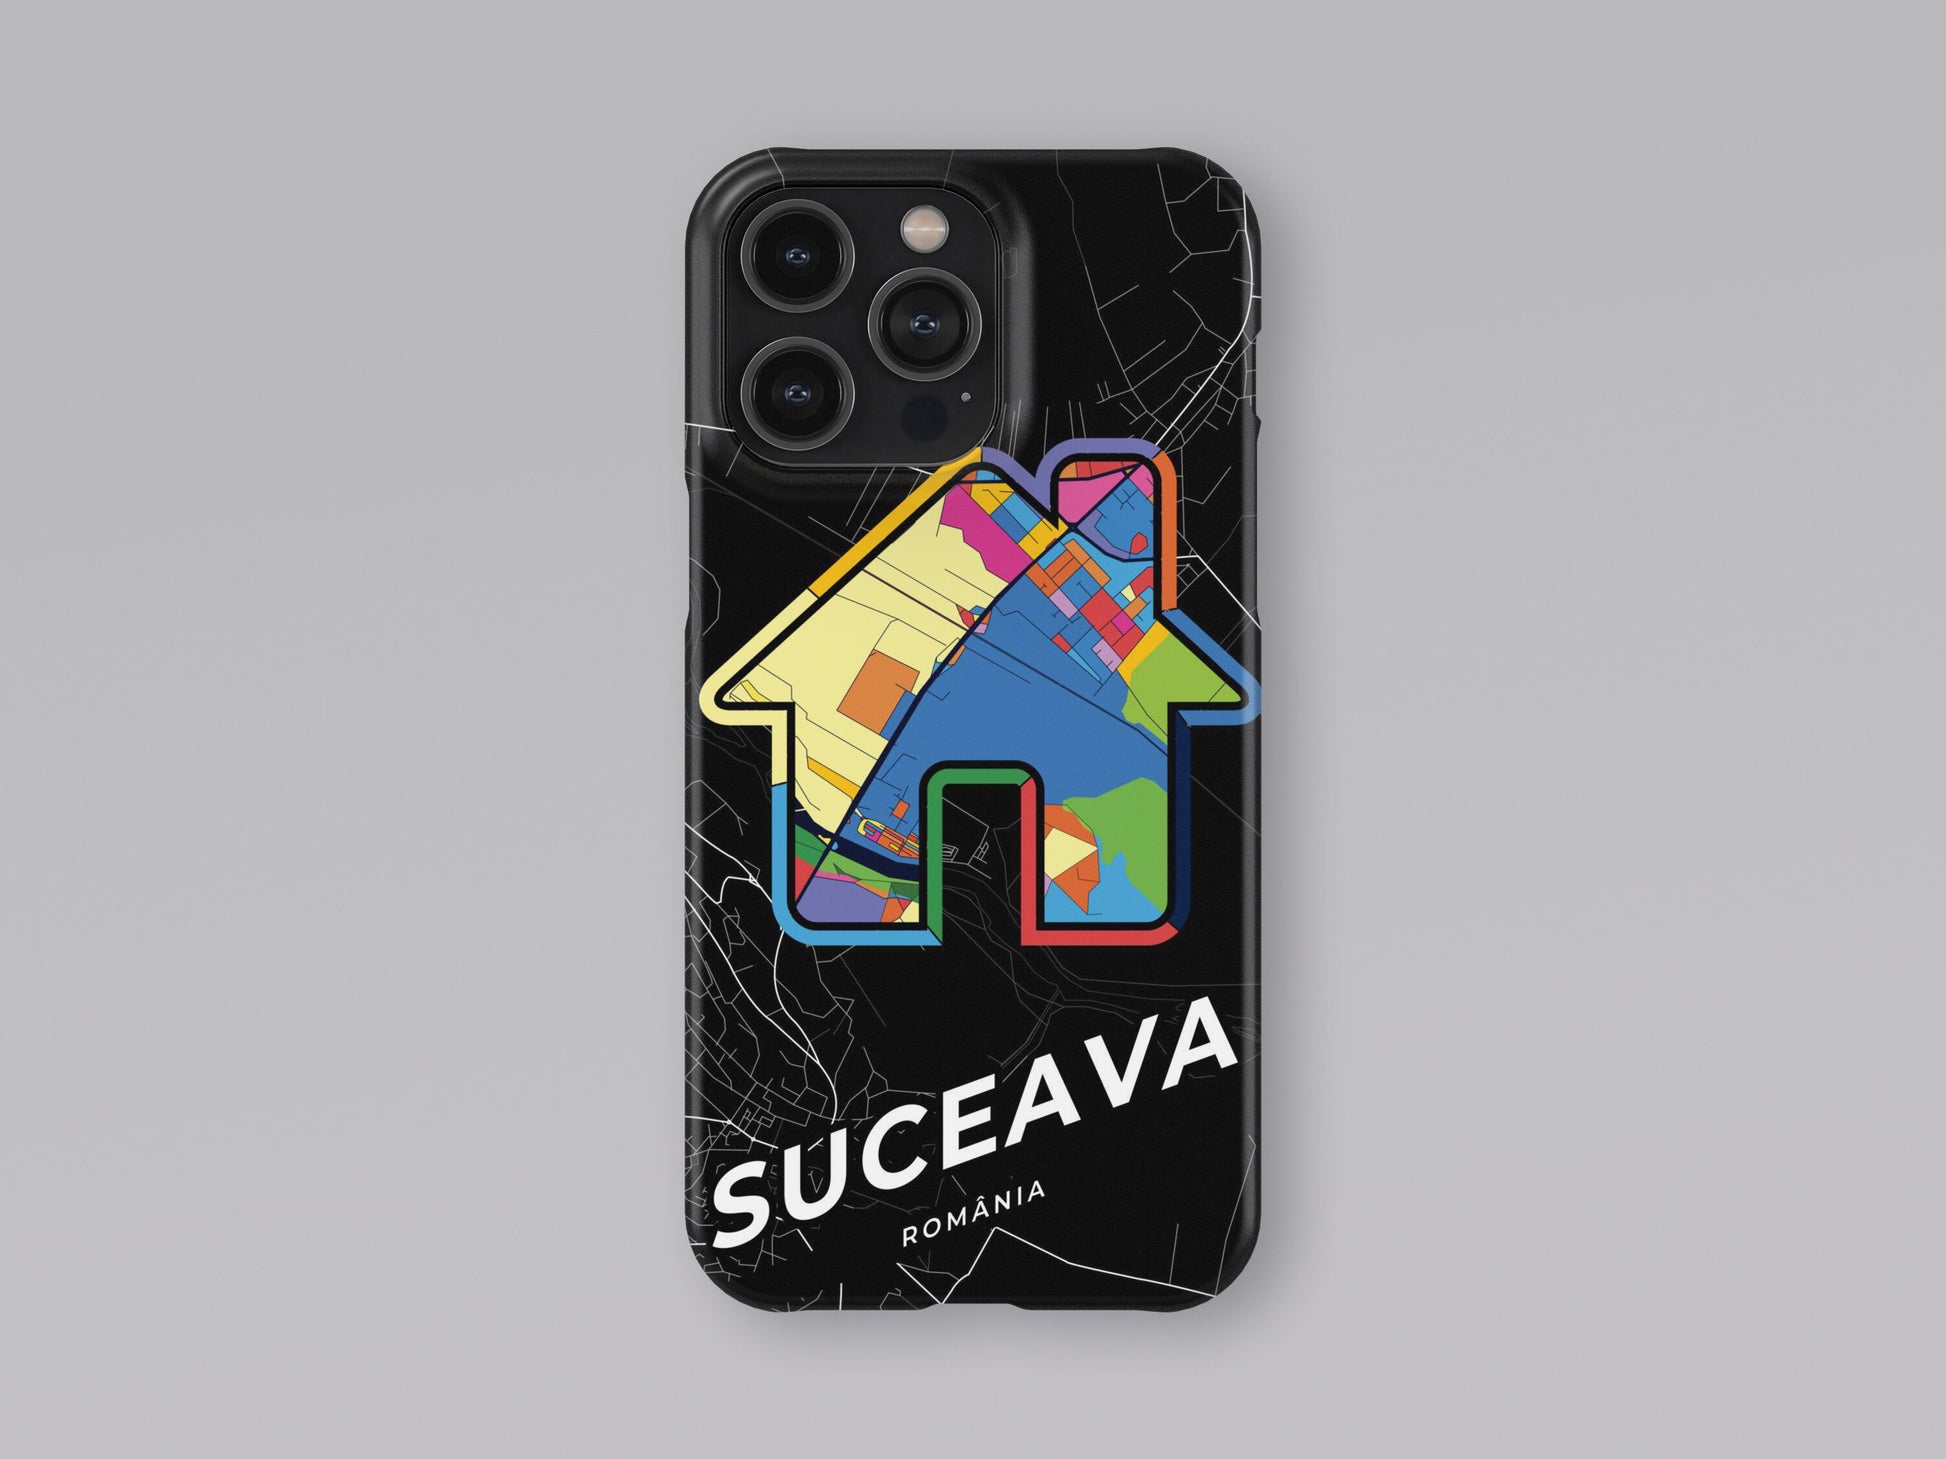 Suceava Romania slim phone case with colorful icon 3